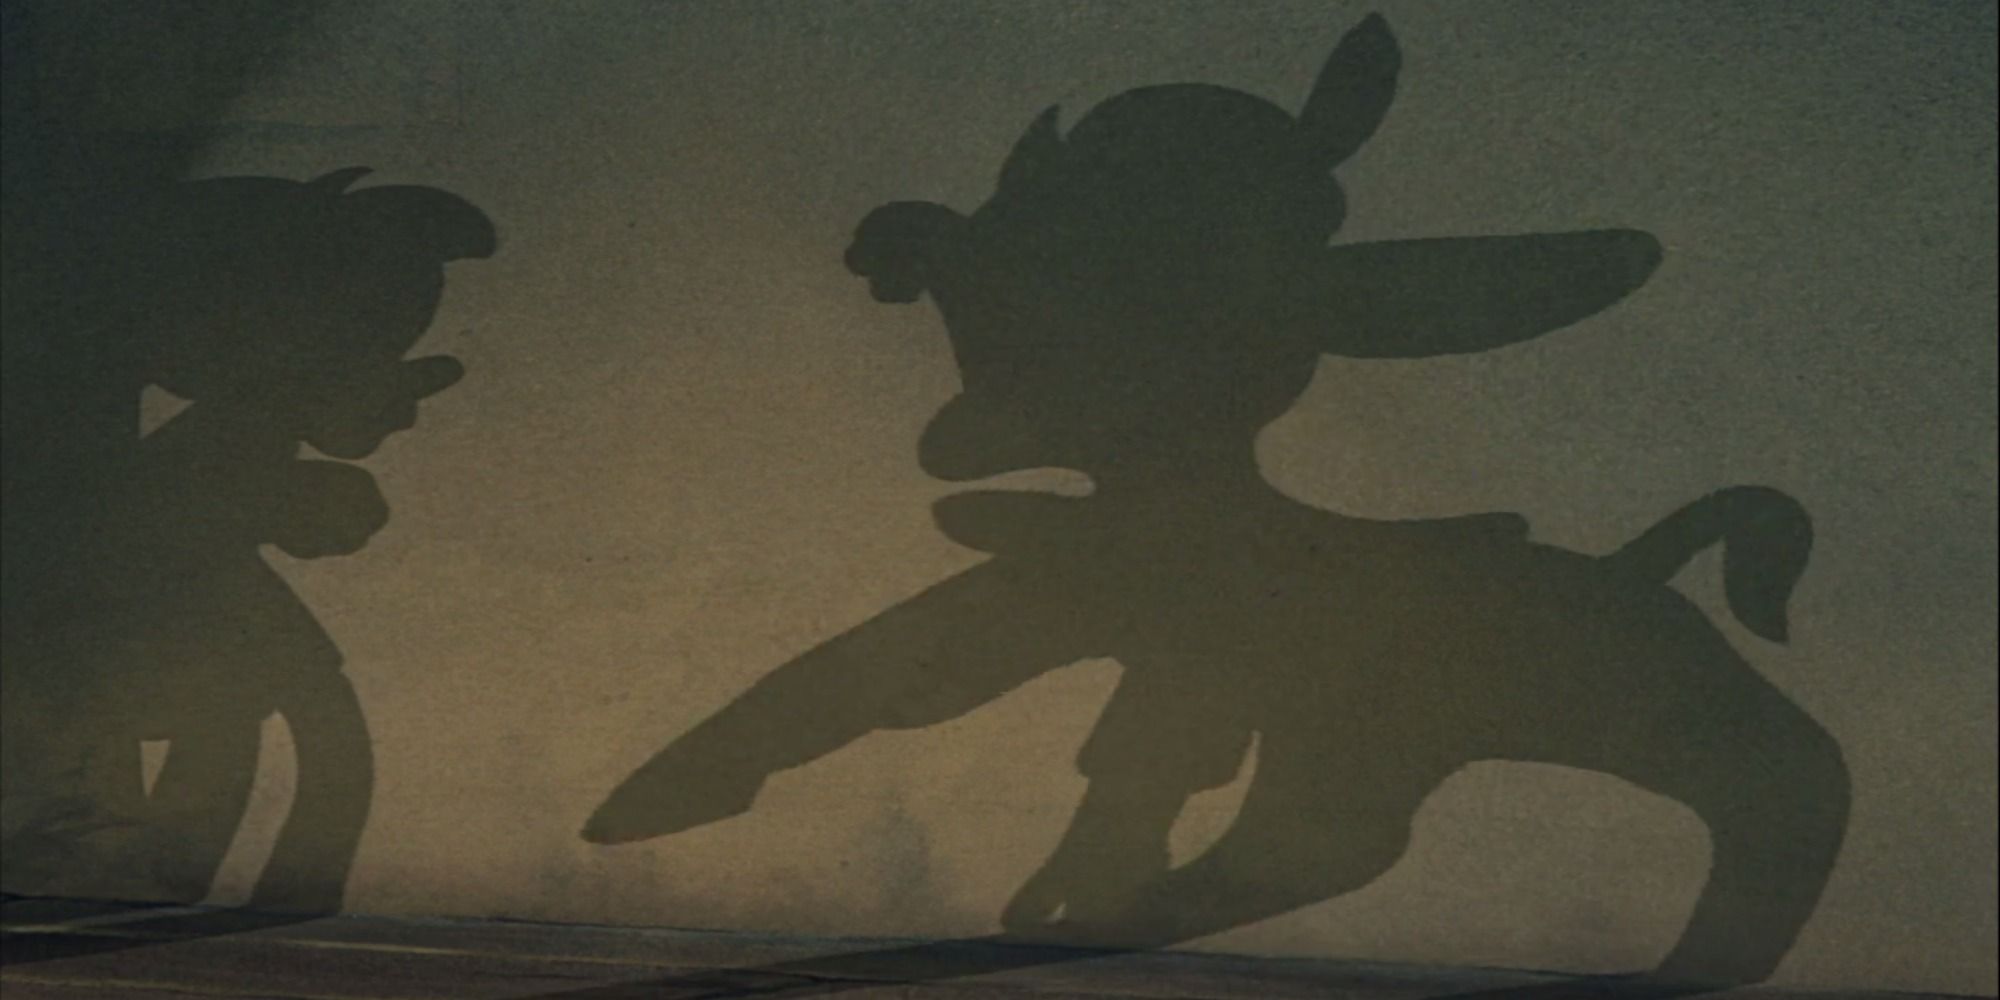 Pinocchio watching Lampwick transform into a donkey in Pinocchio (1940)